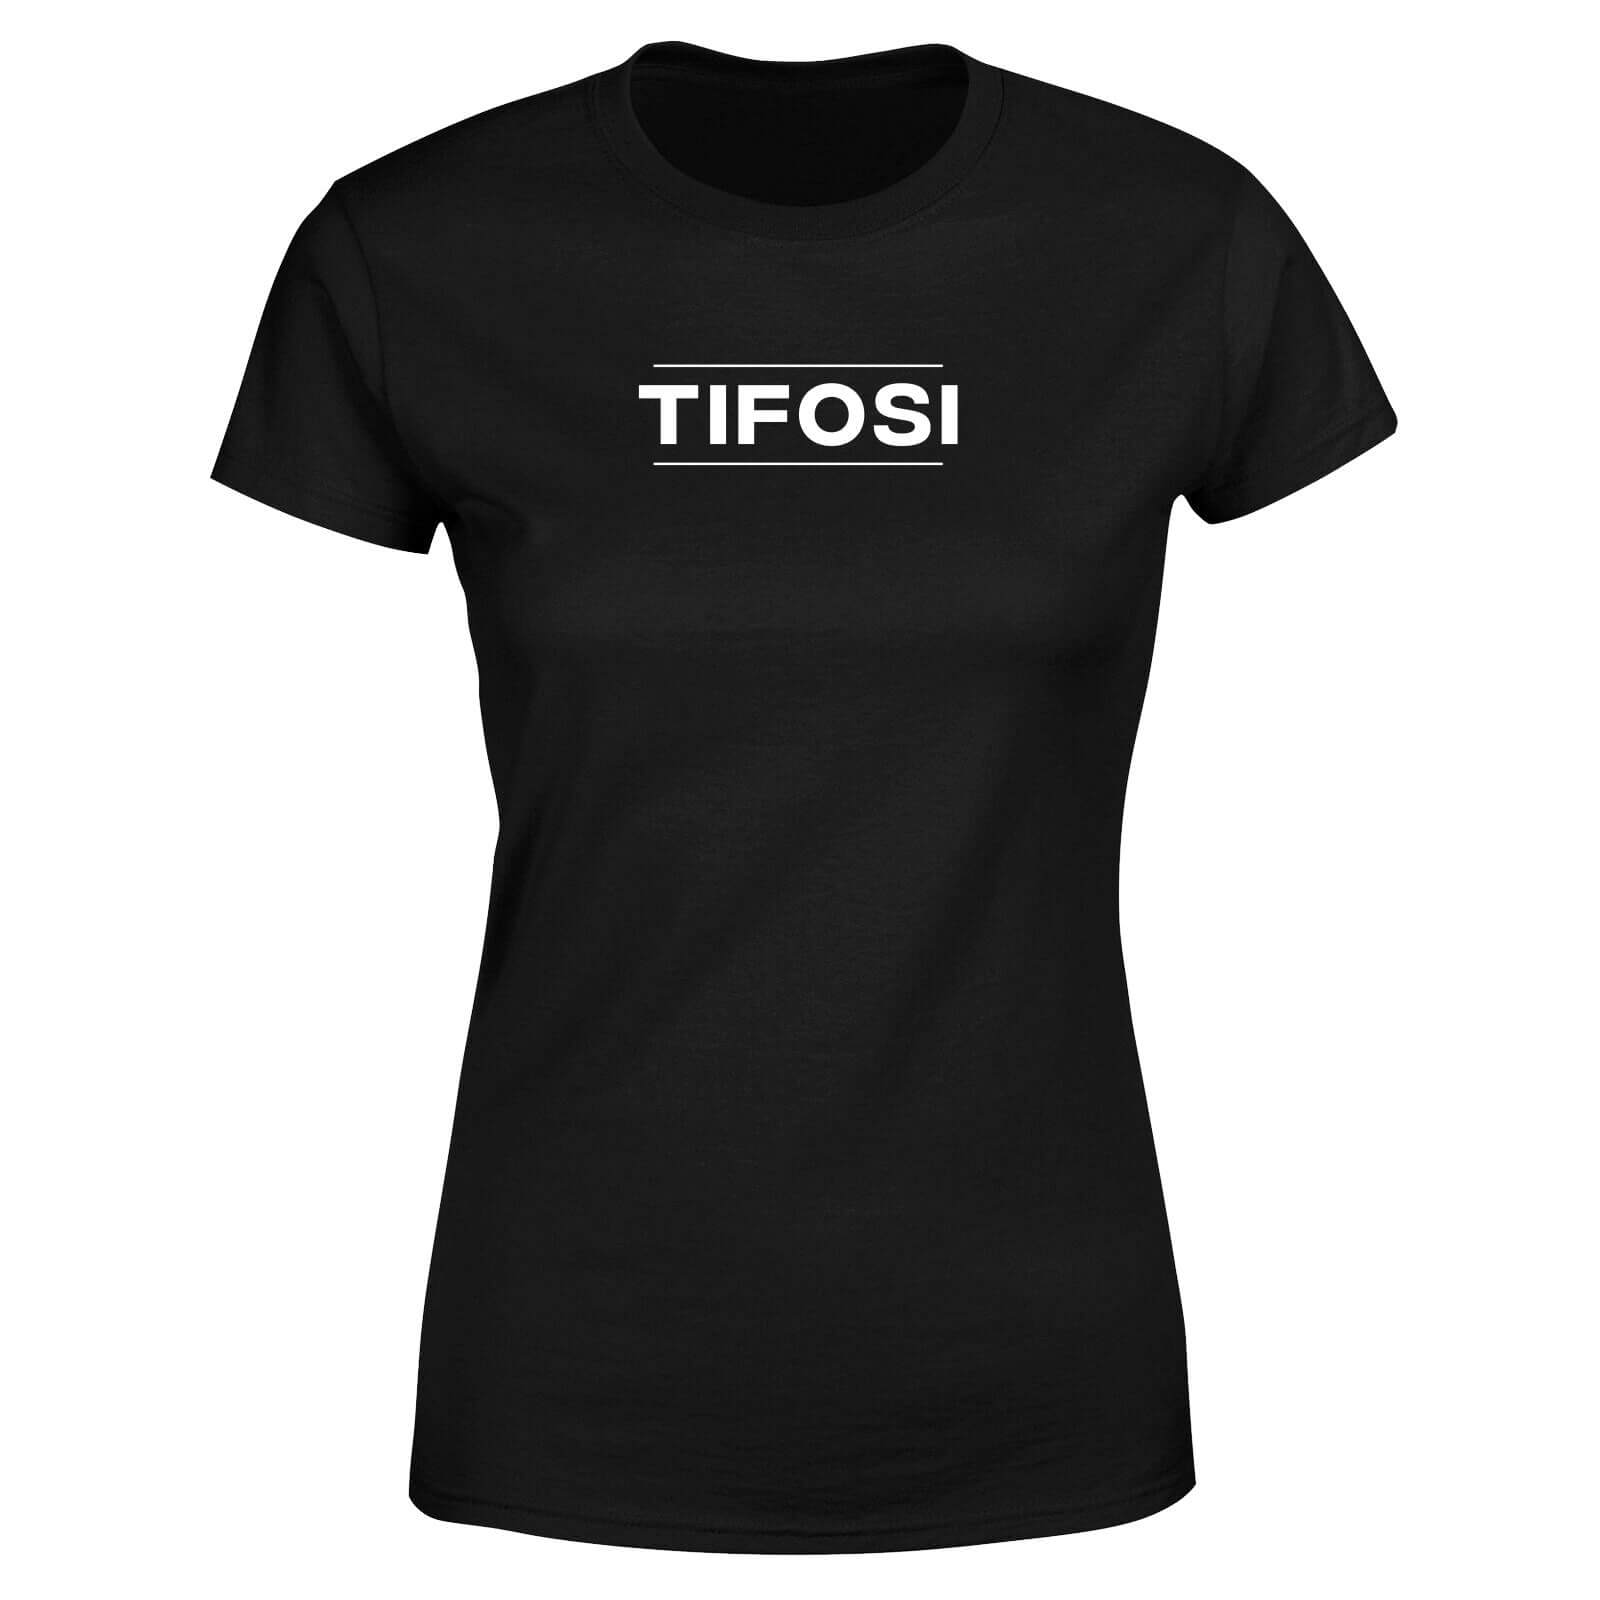 Tifosi Women's T-Shirt - Black - 3XL - Black